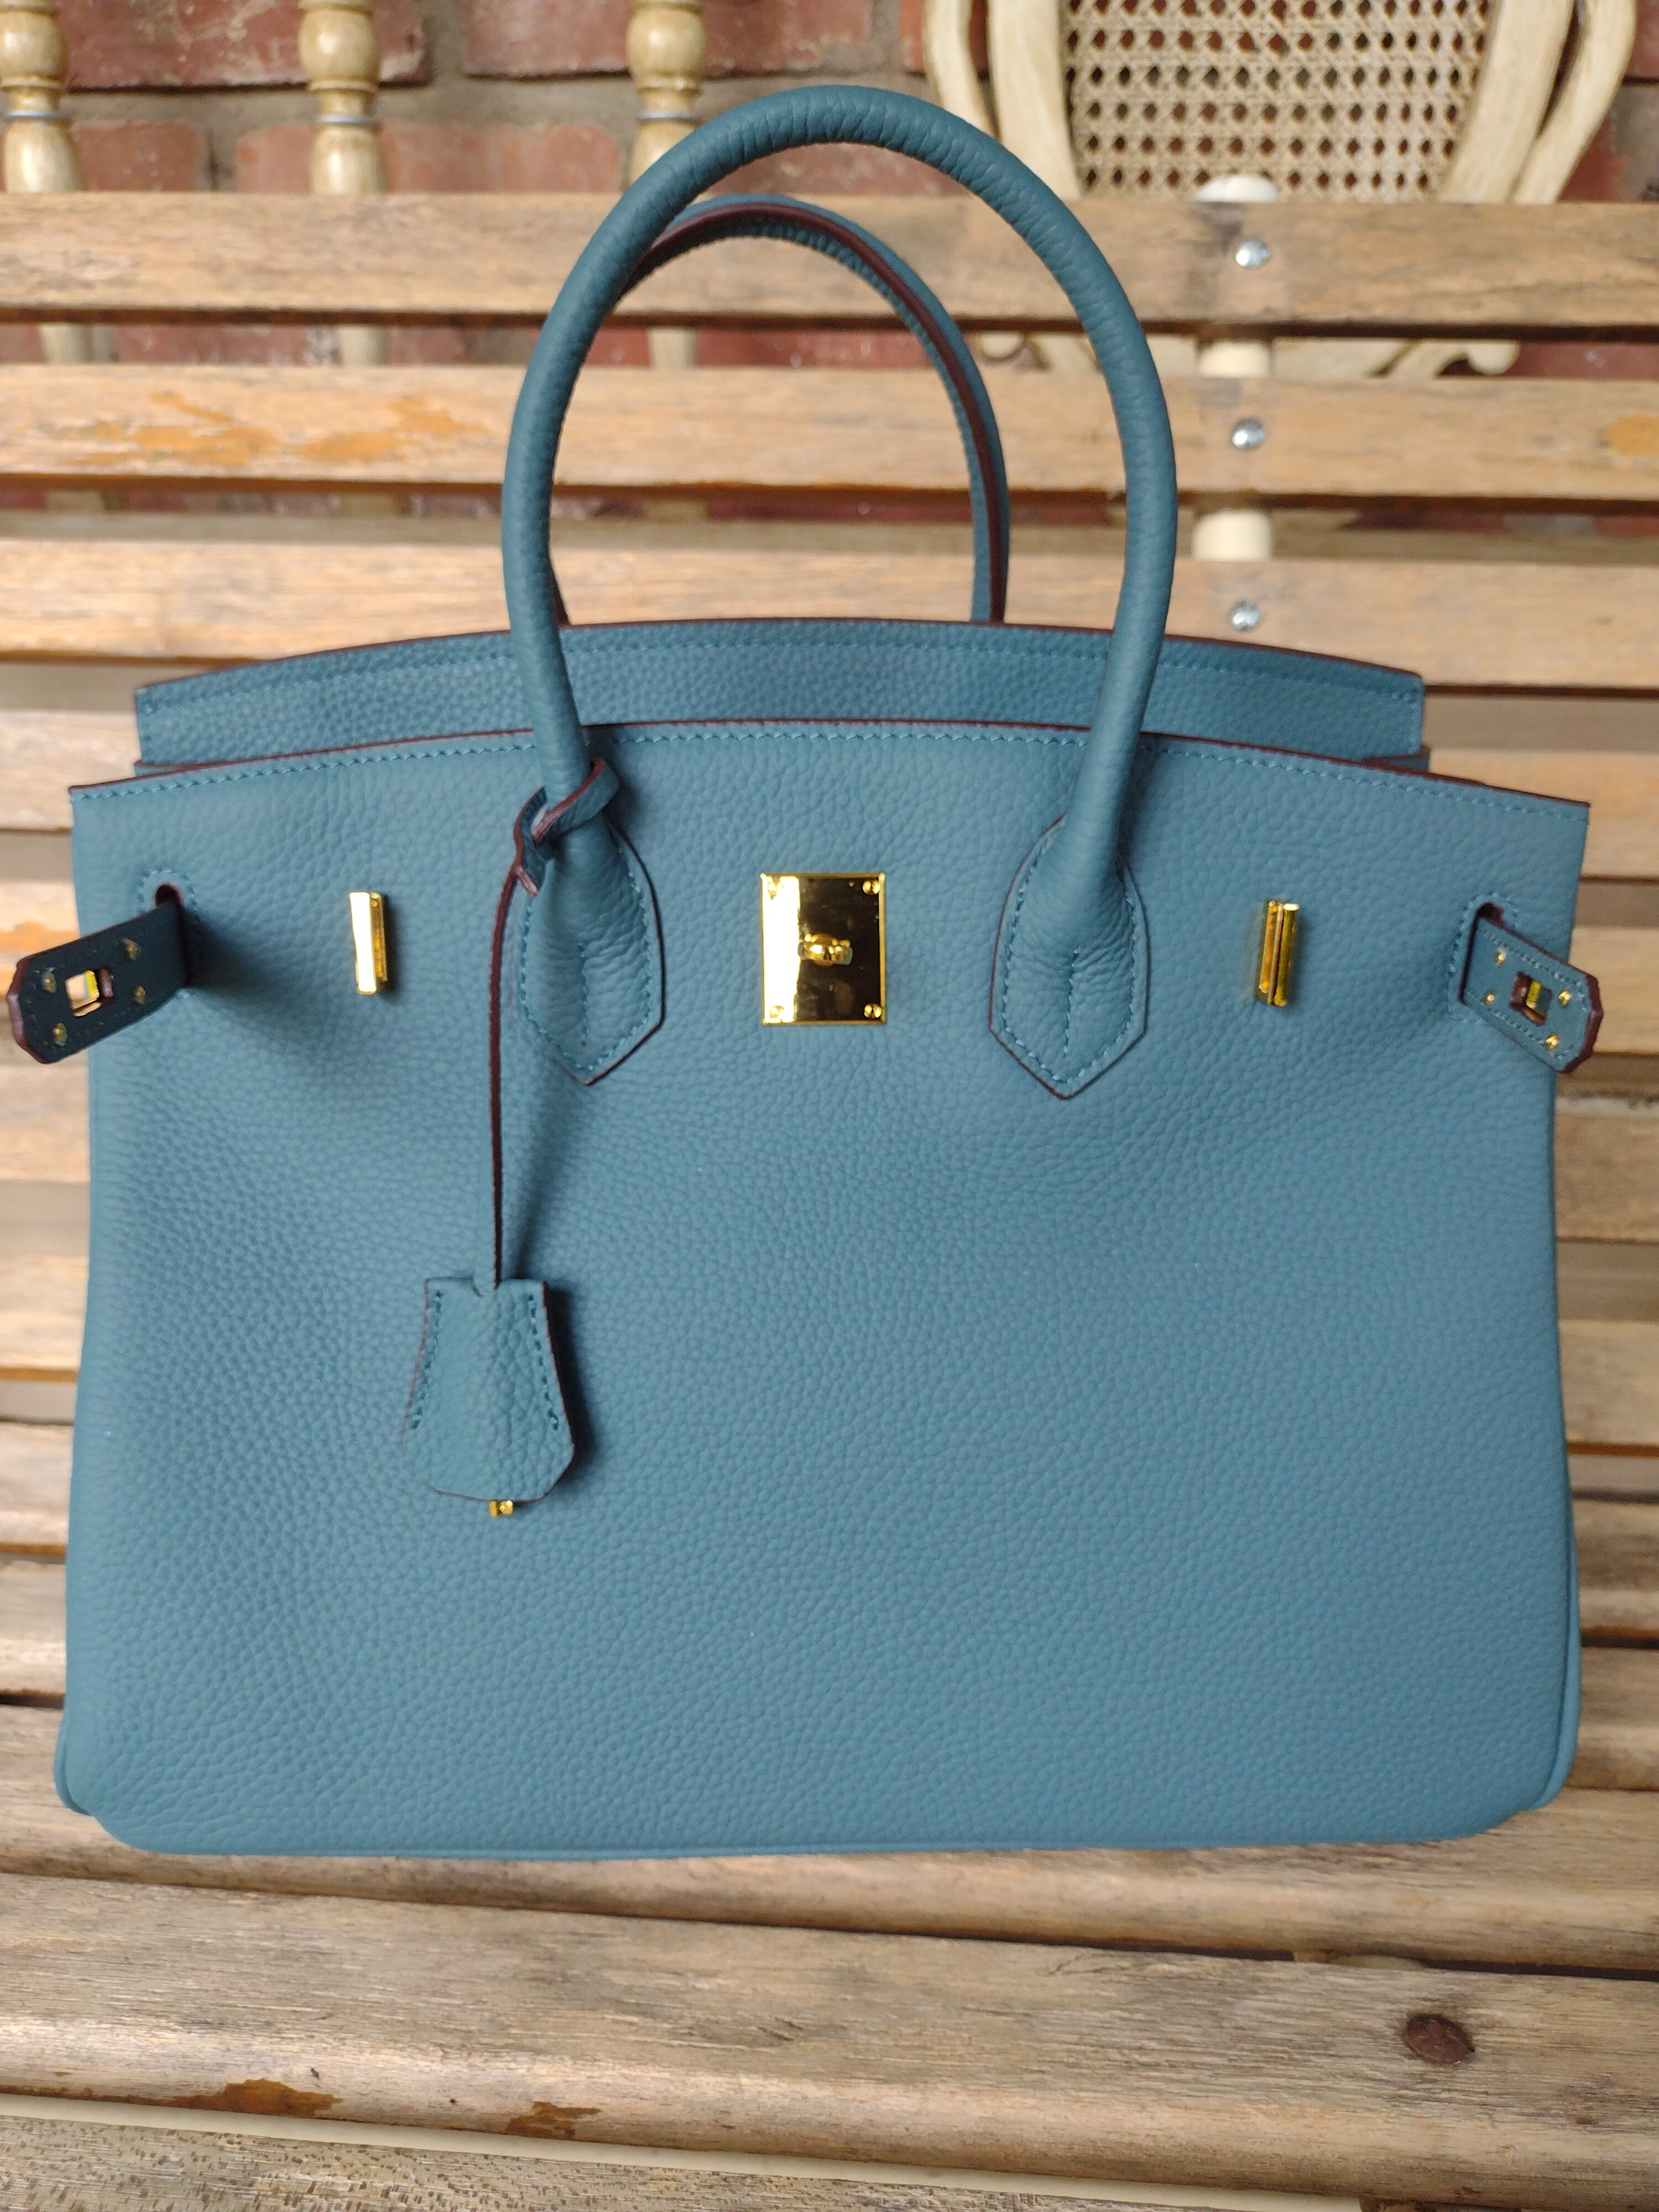 Women's Genuine Leather Top Handle Handbags  - 35 cm Version - Without Shoulder Strap photo review